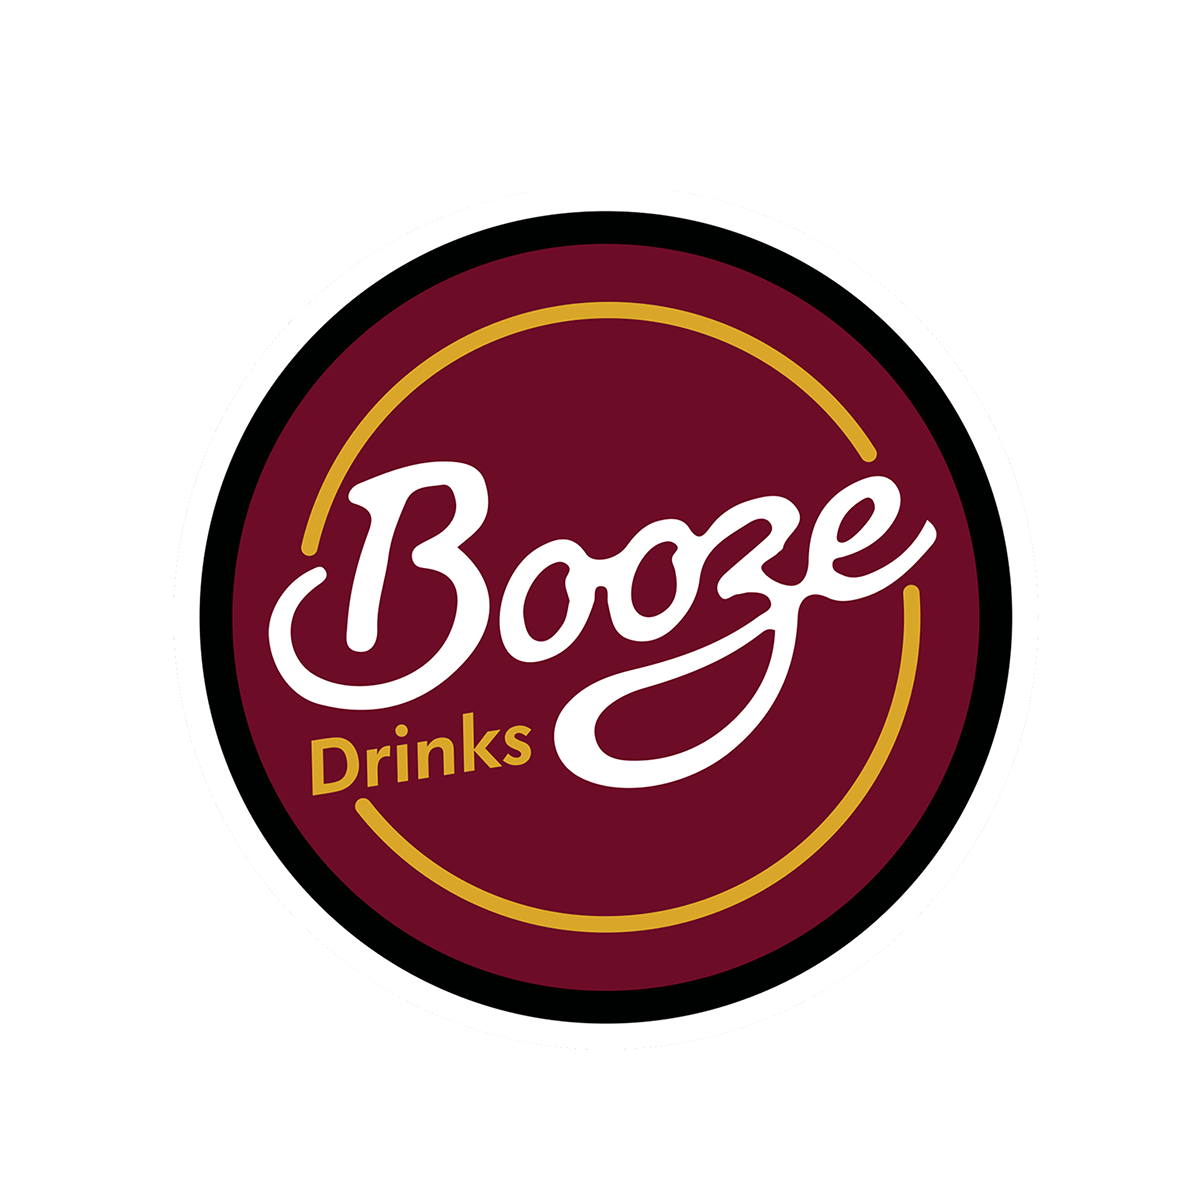 Booze Drinks